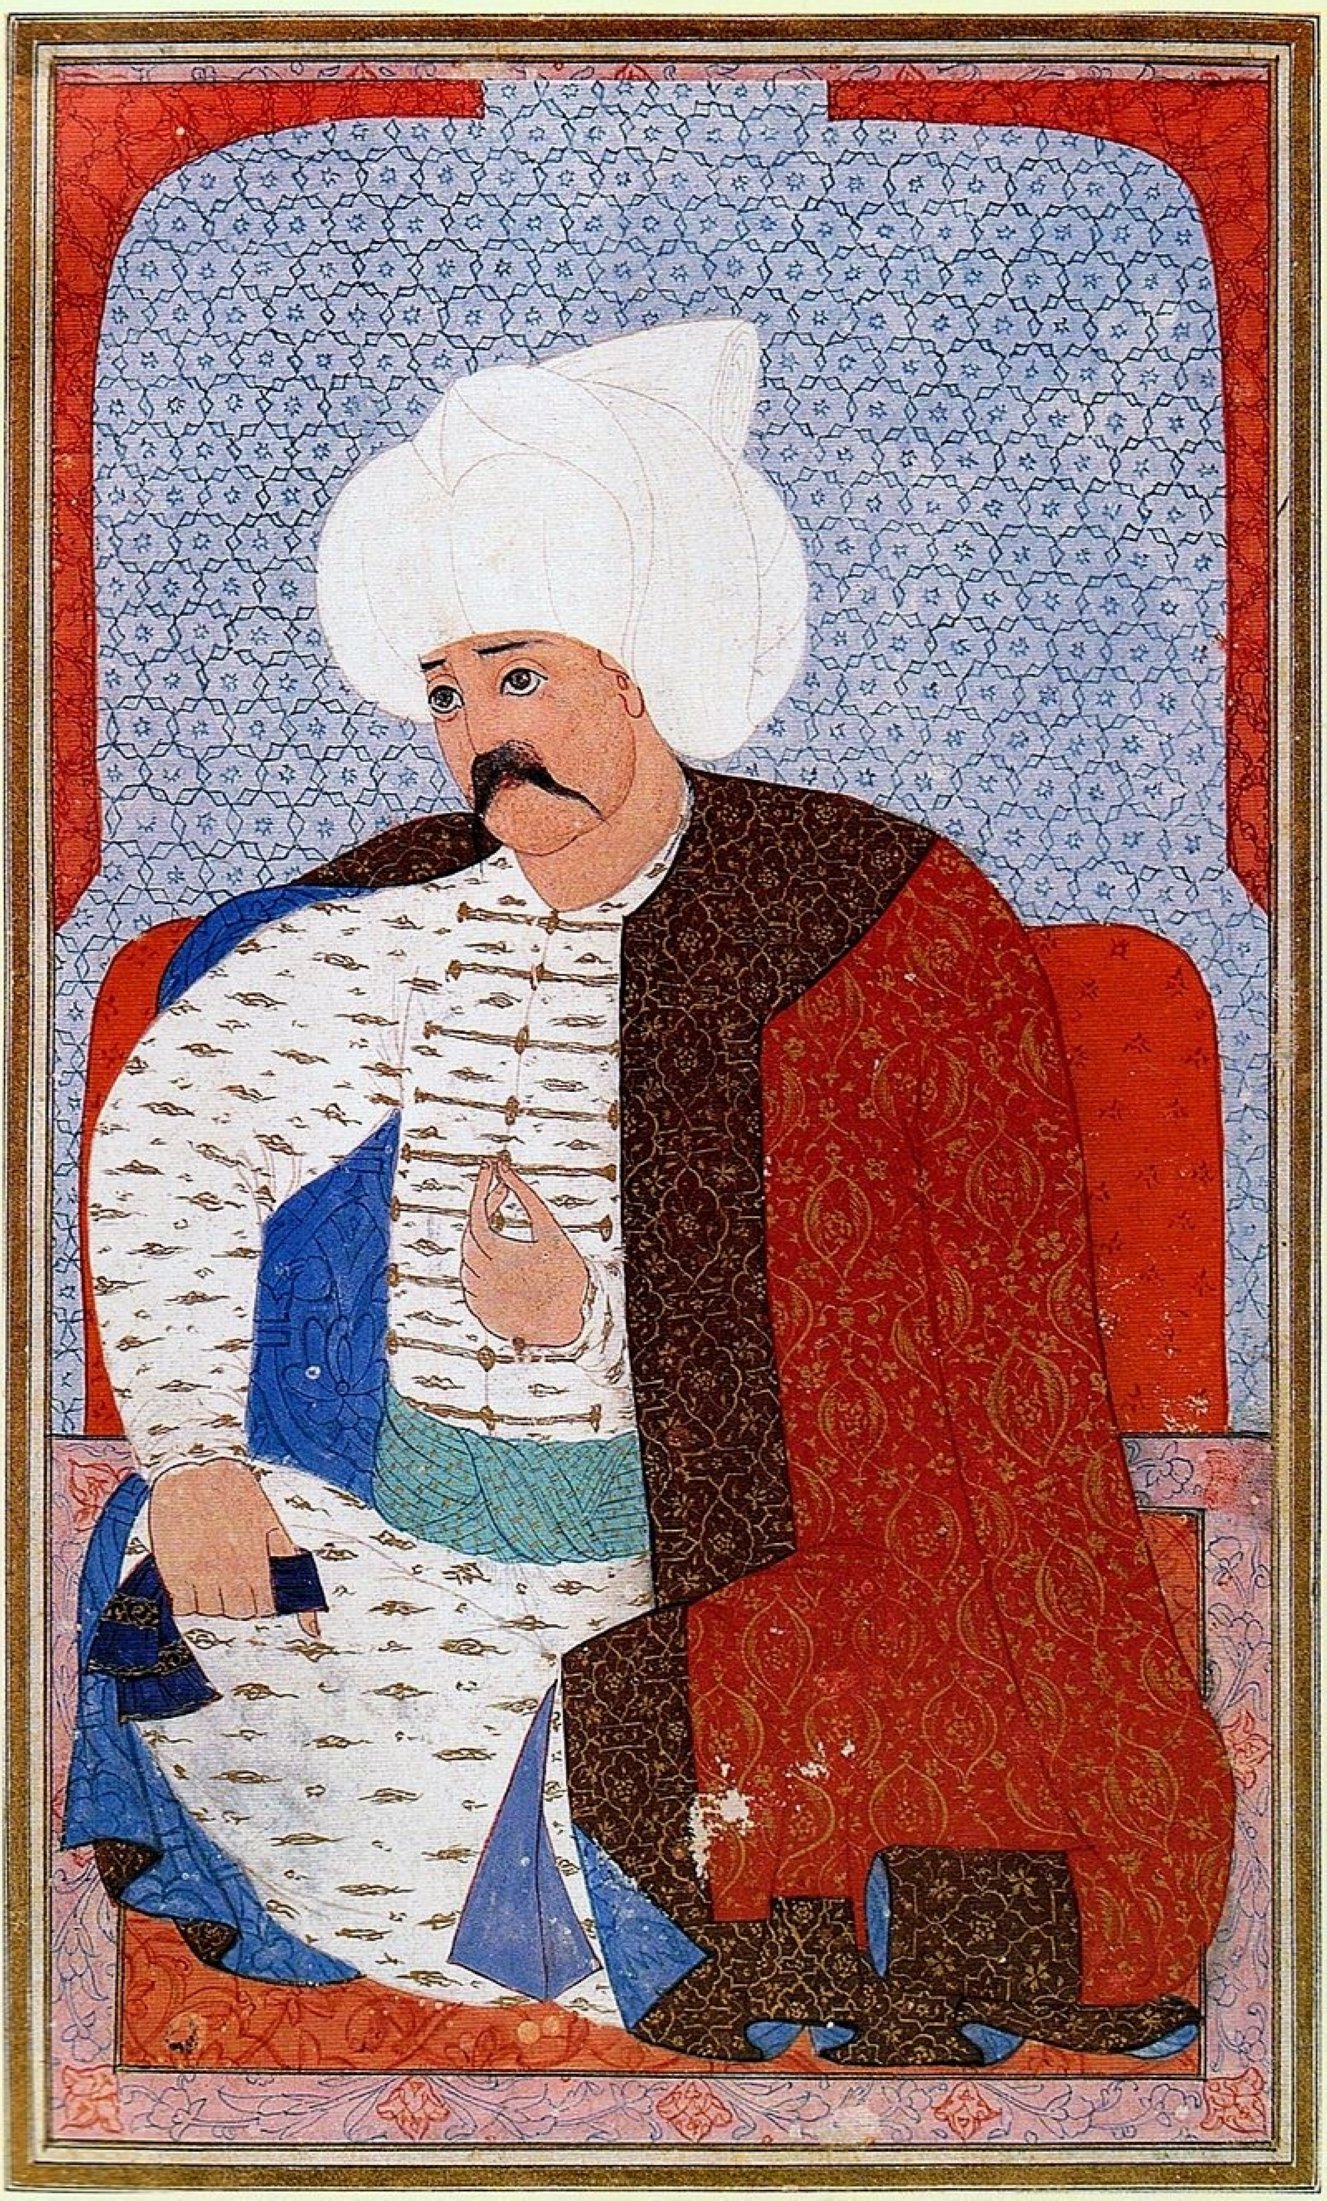 A miniature of Sultan Selim by chief Ottoman miniaturist Nakkaş Osman.